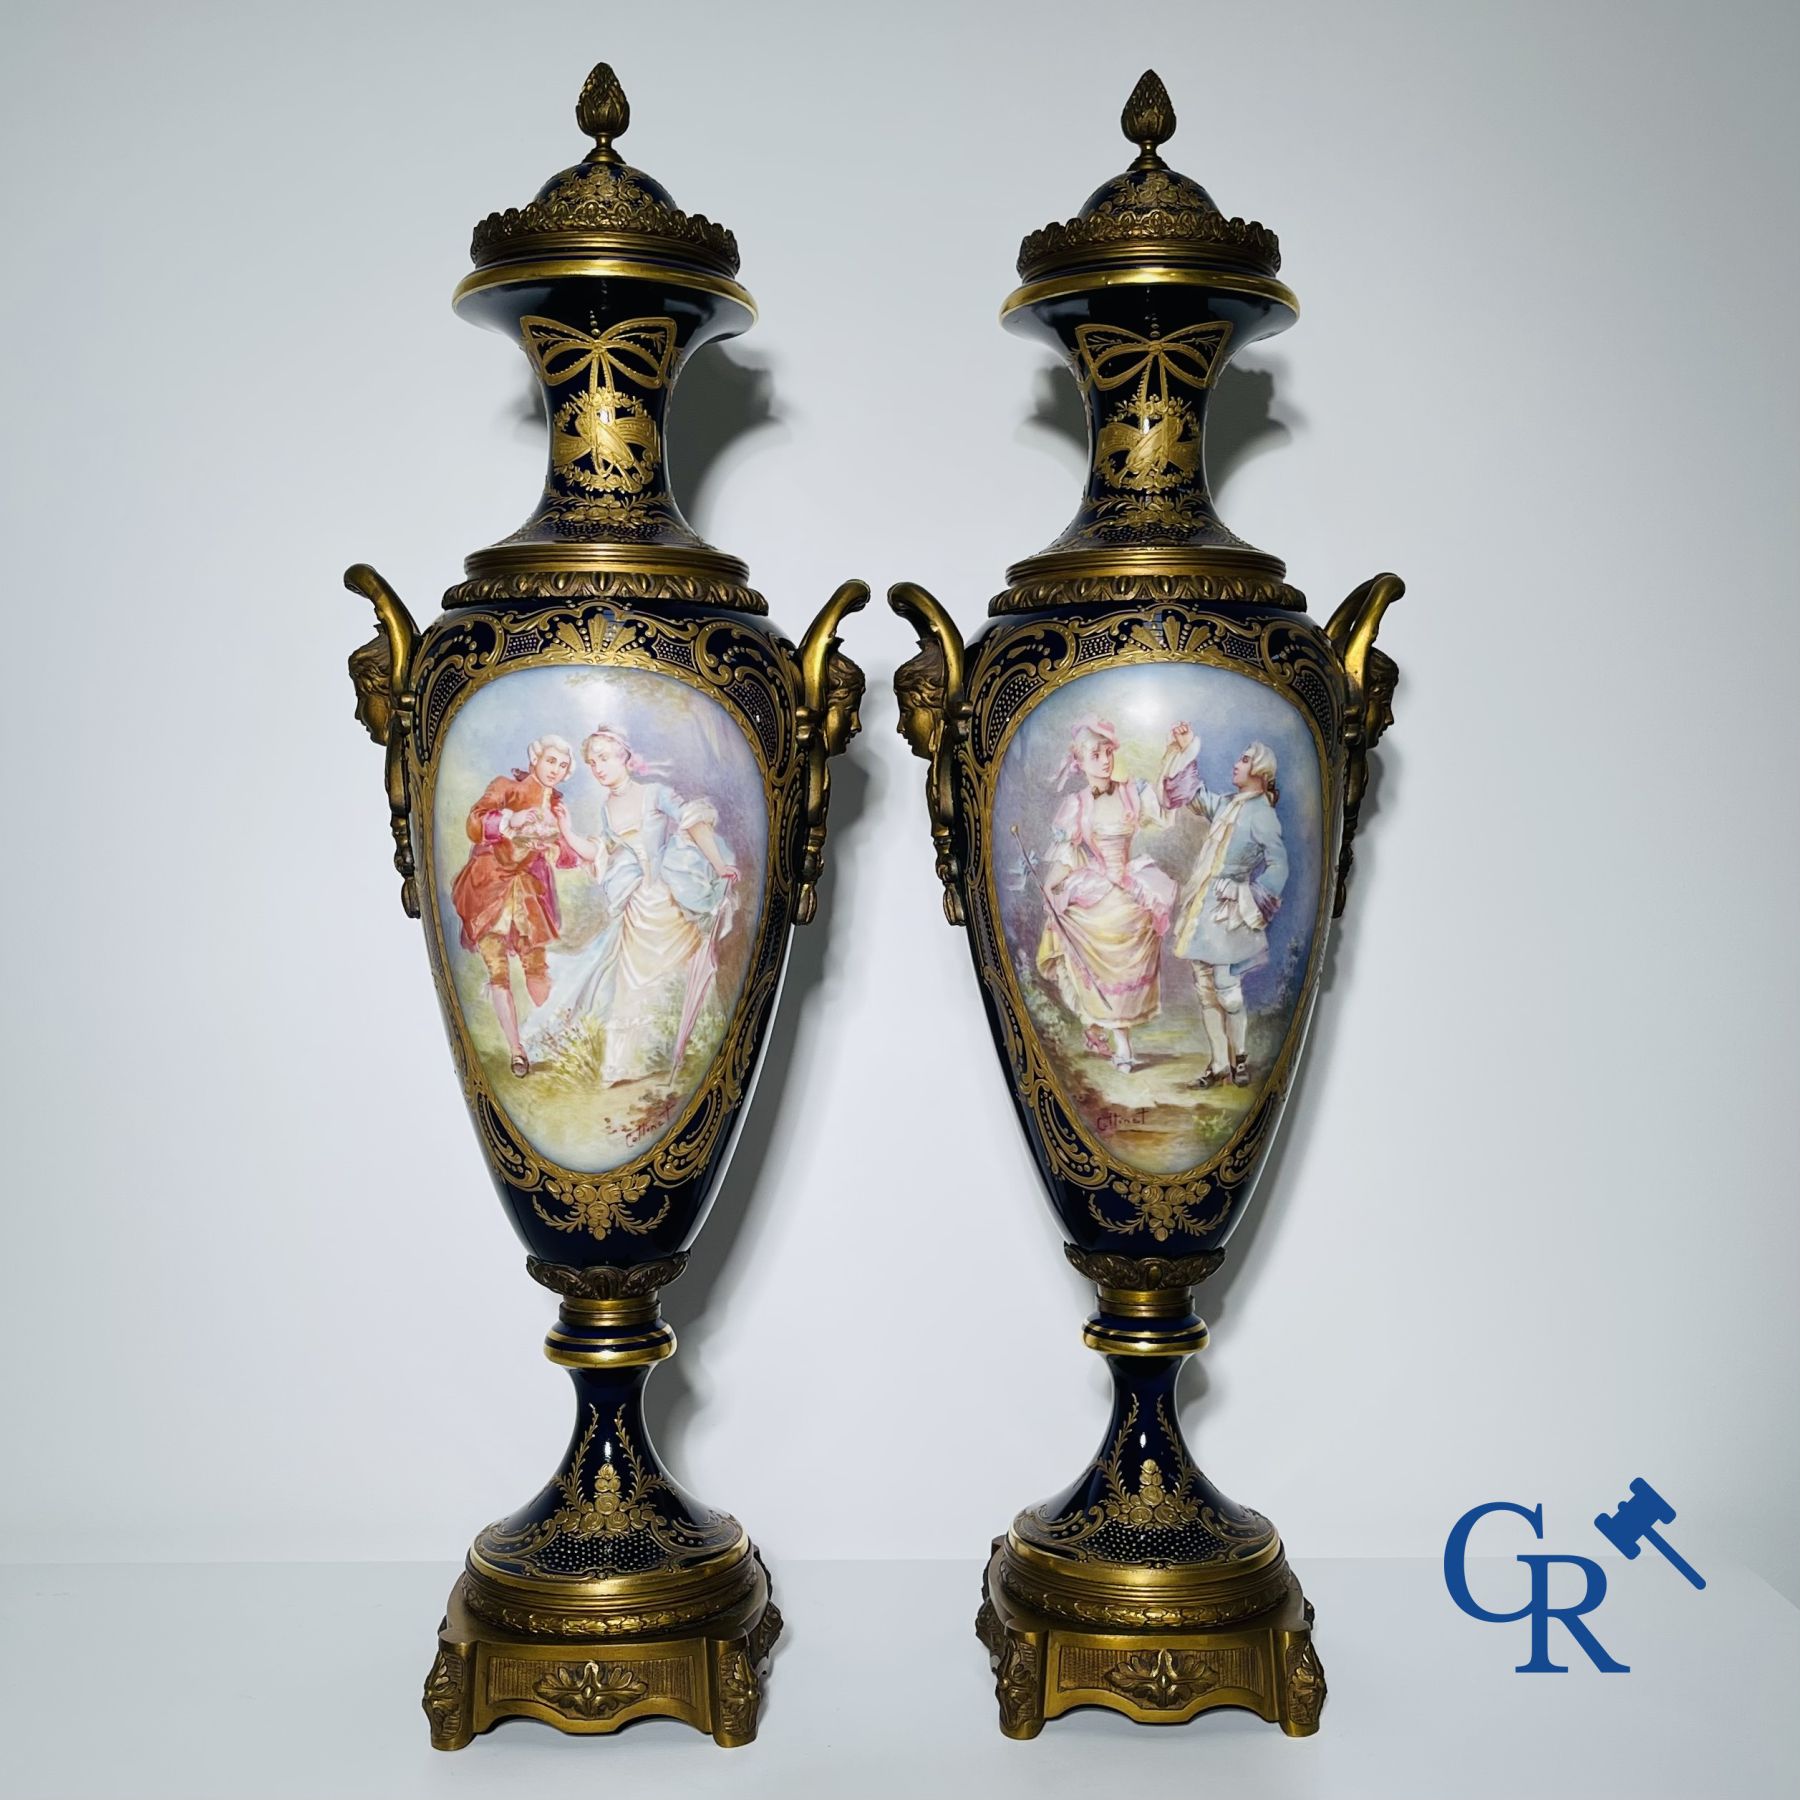 Porcelain: Sèvres: Pair of large bronze mounted vases in Sevres porcelain.